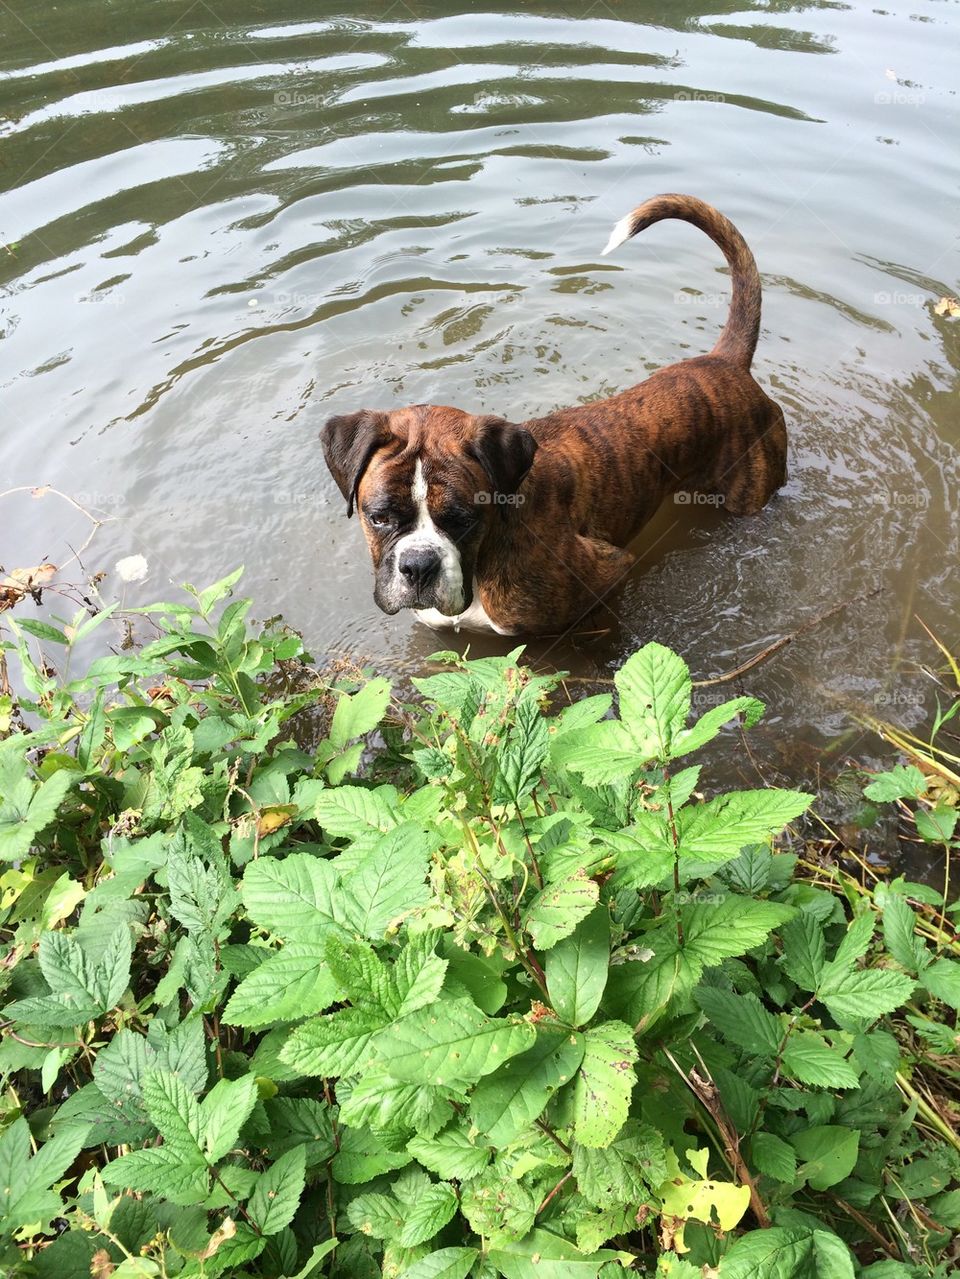 Reggie having a swim